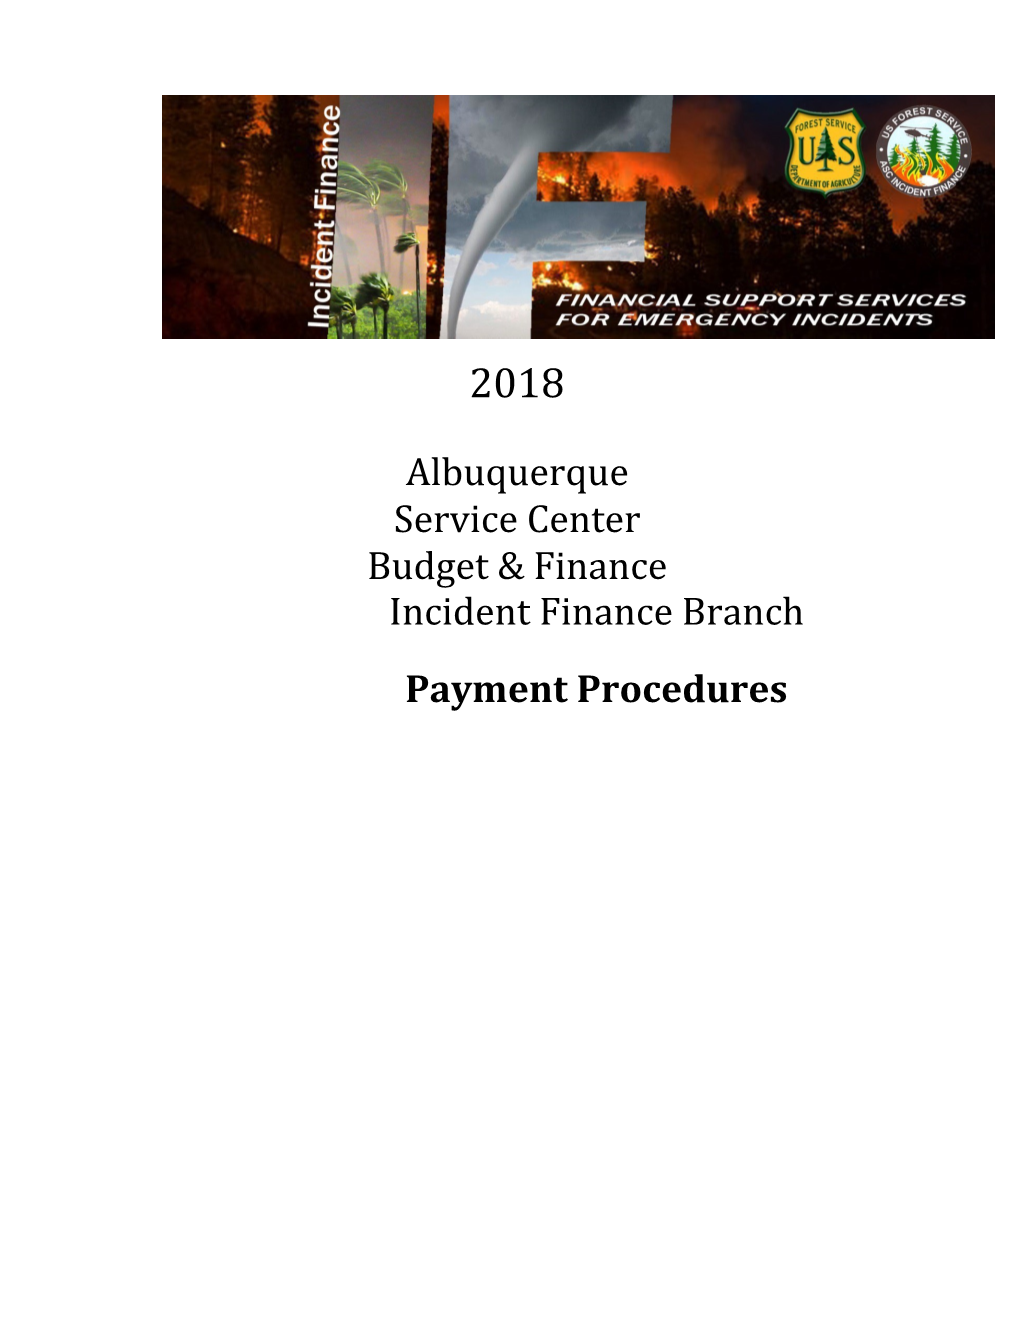 ASC, B&F Incident Finance Branch